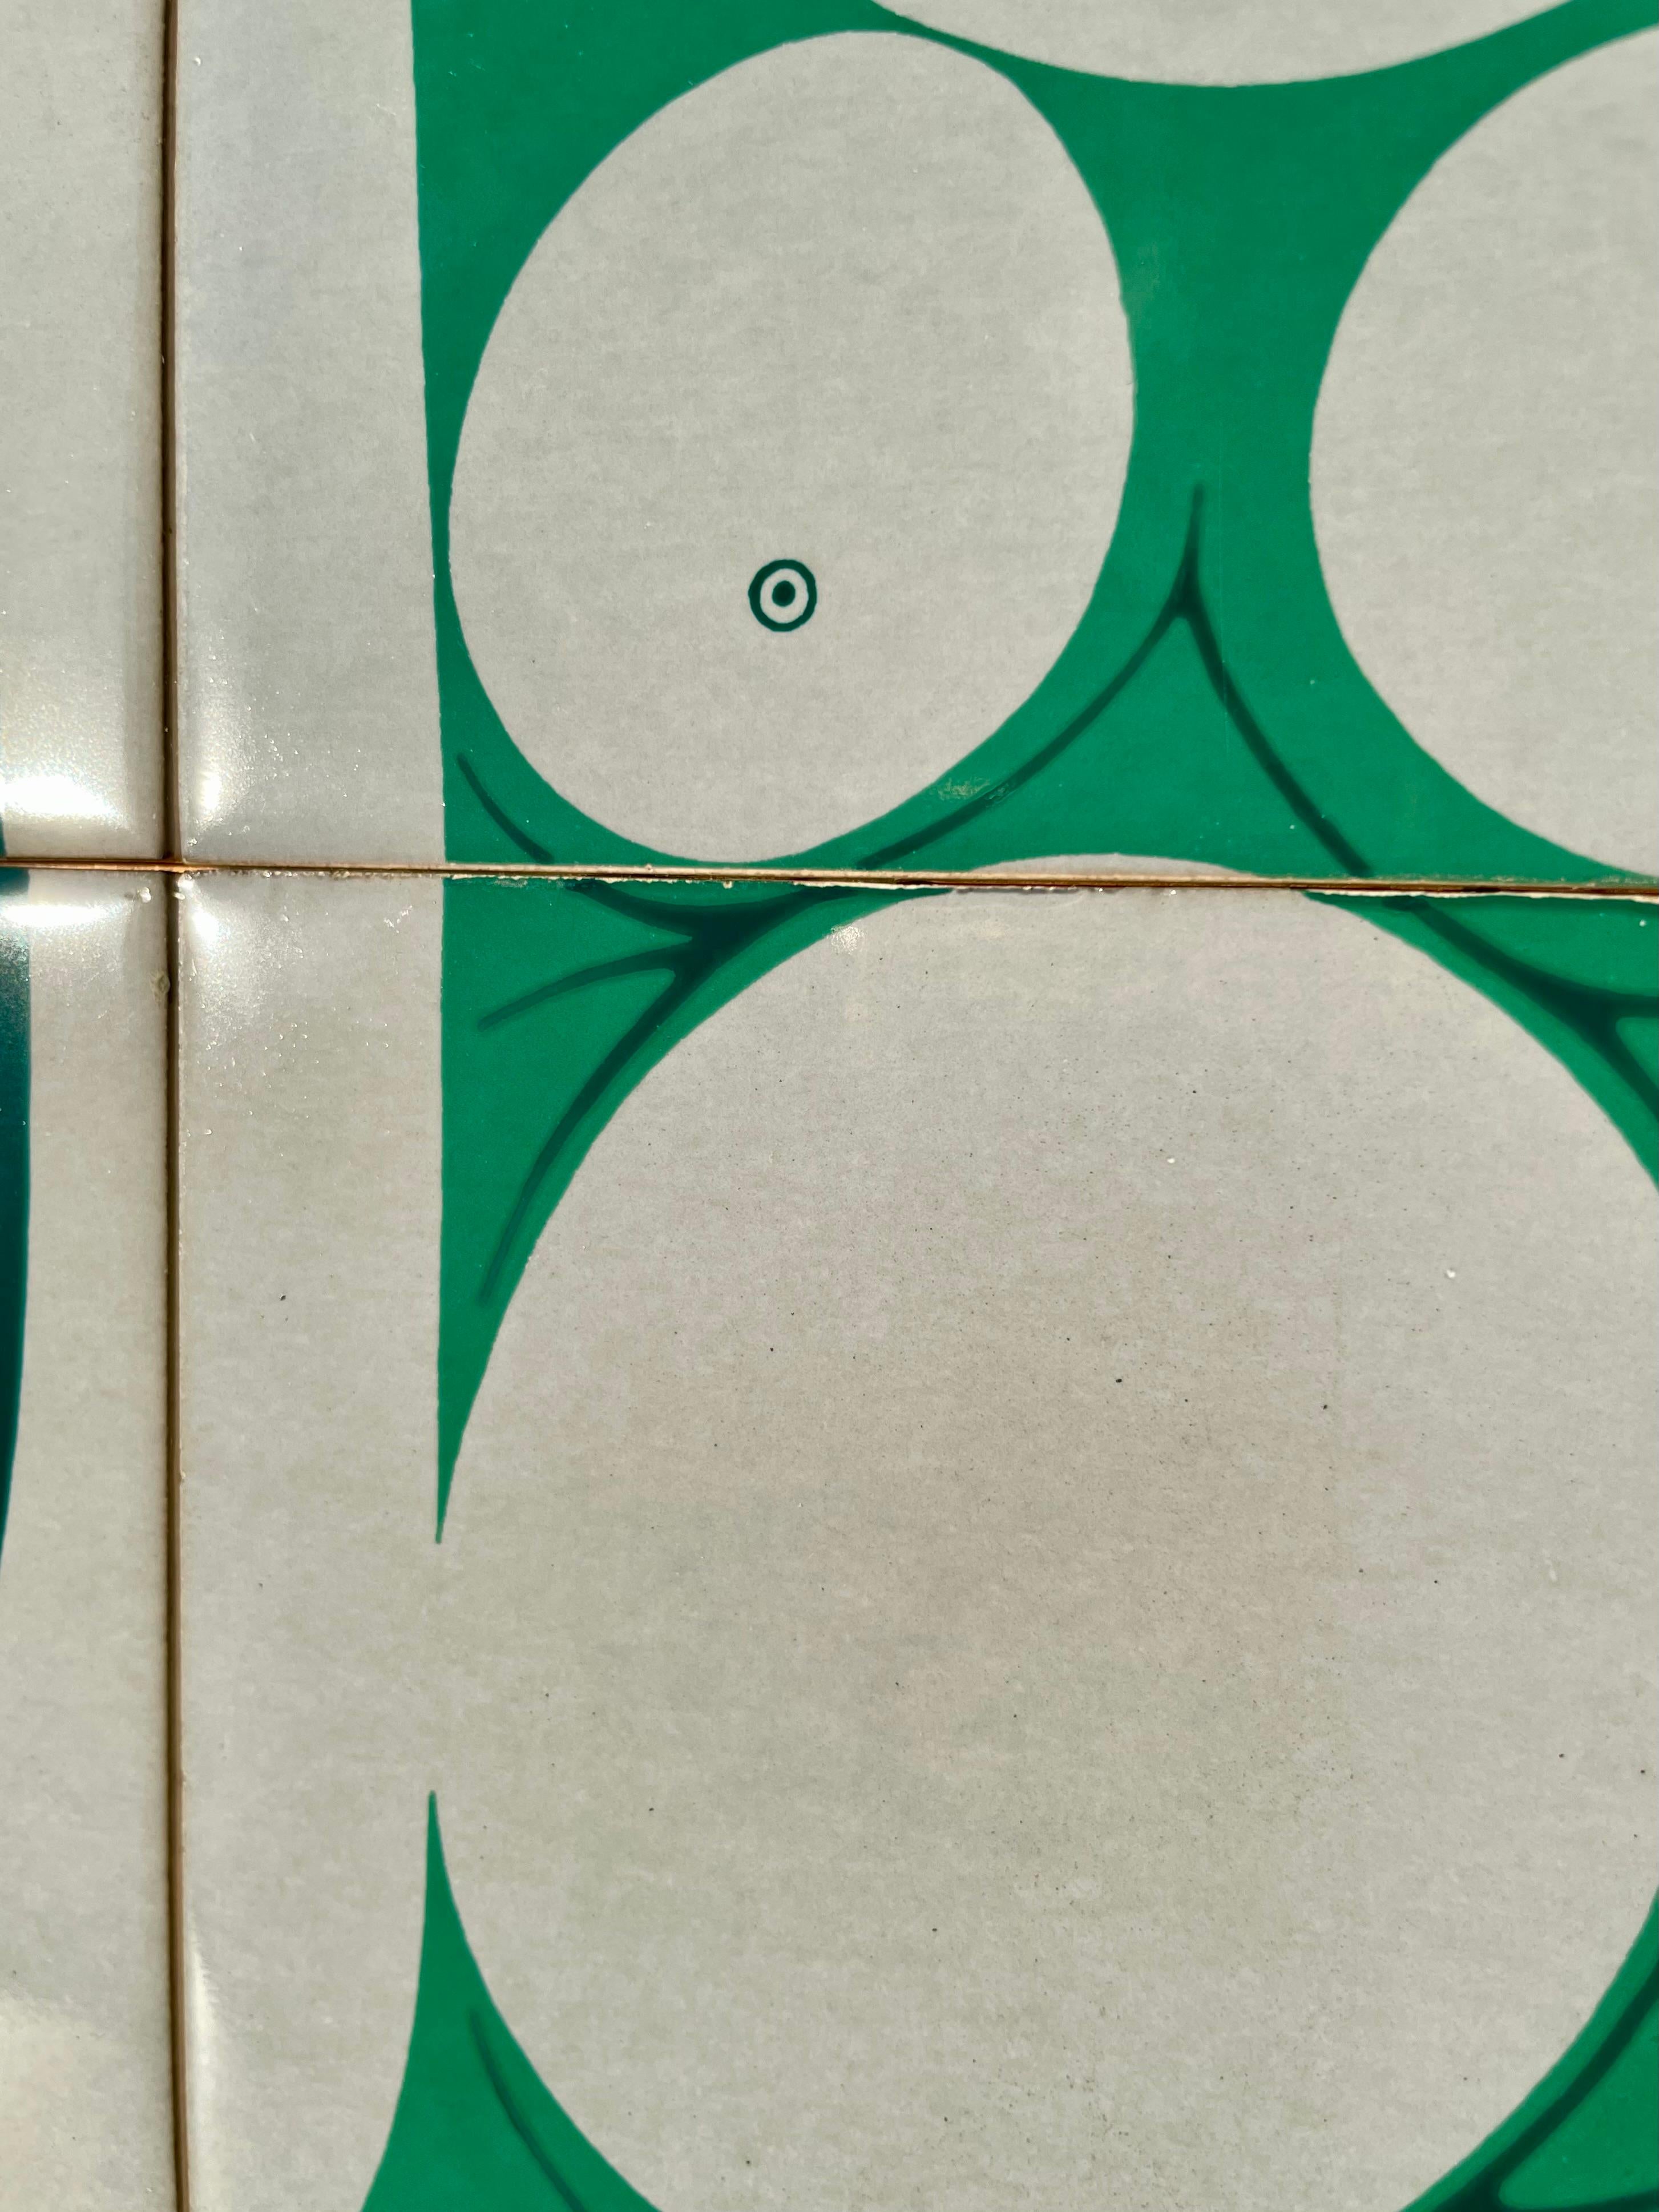 20th Century Bing & Grondahl Modernist Green Tile Wall Art Piece, 1960s For Sale